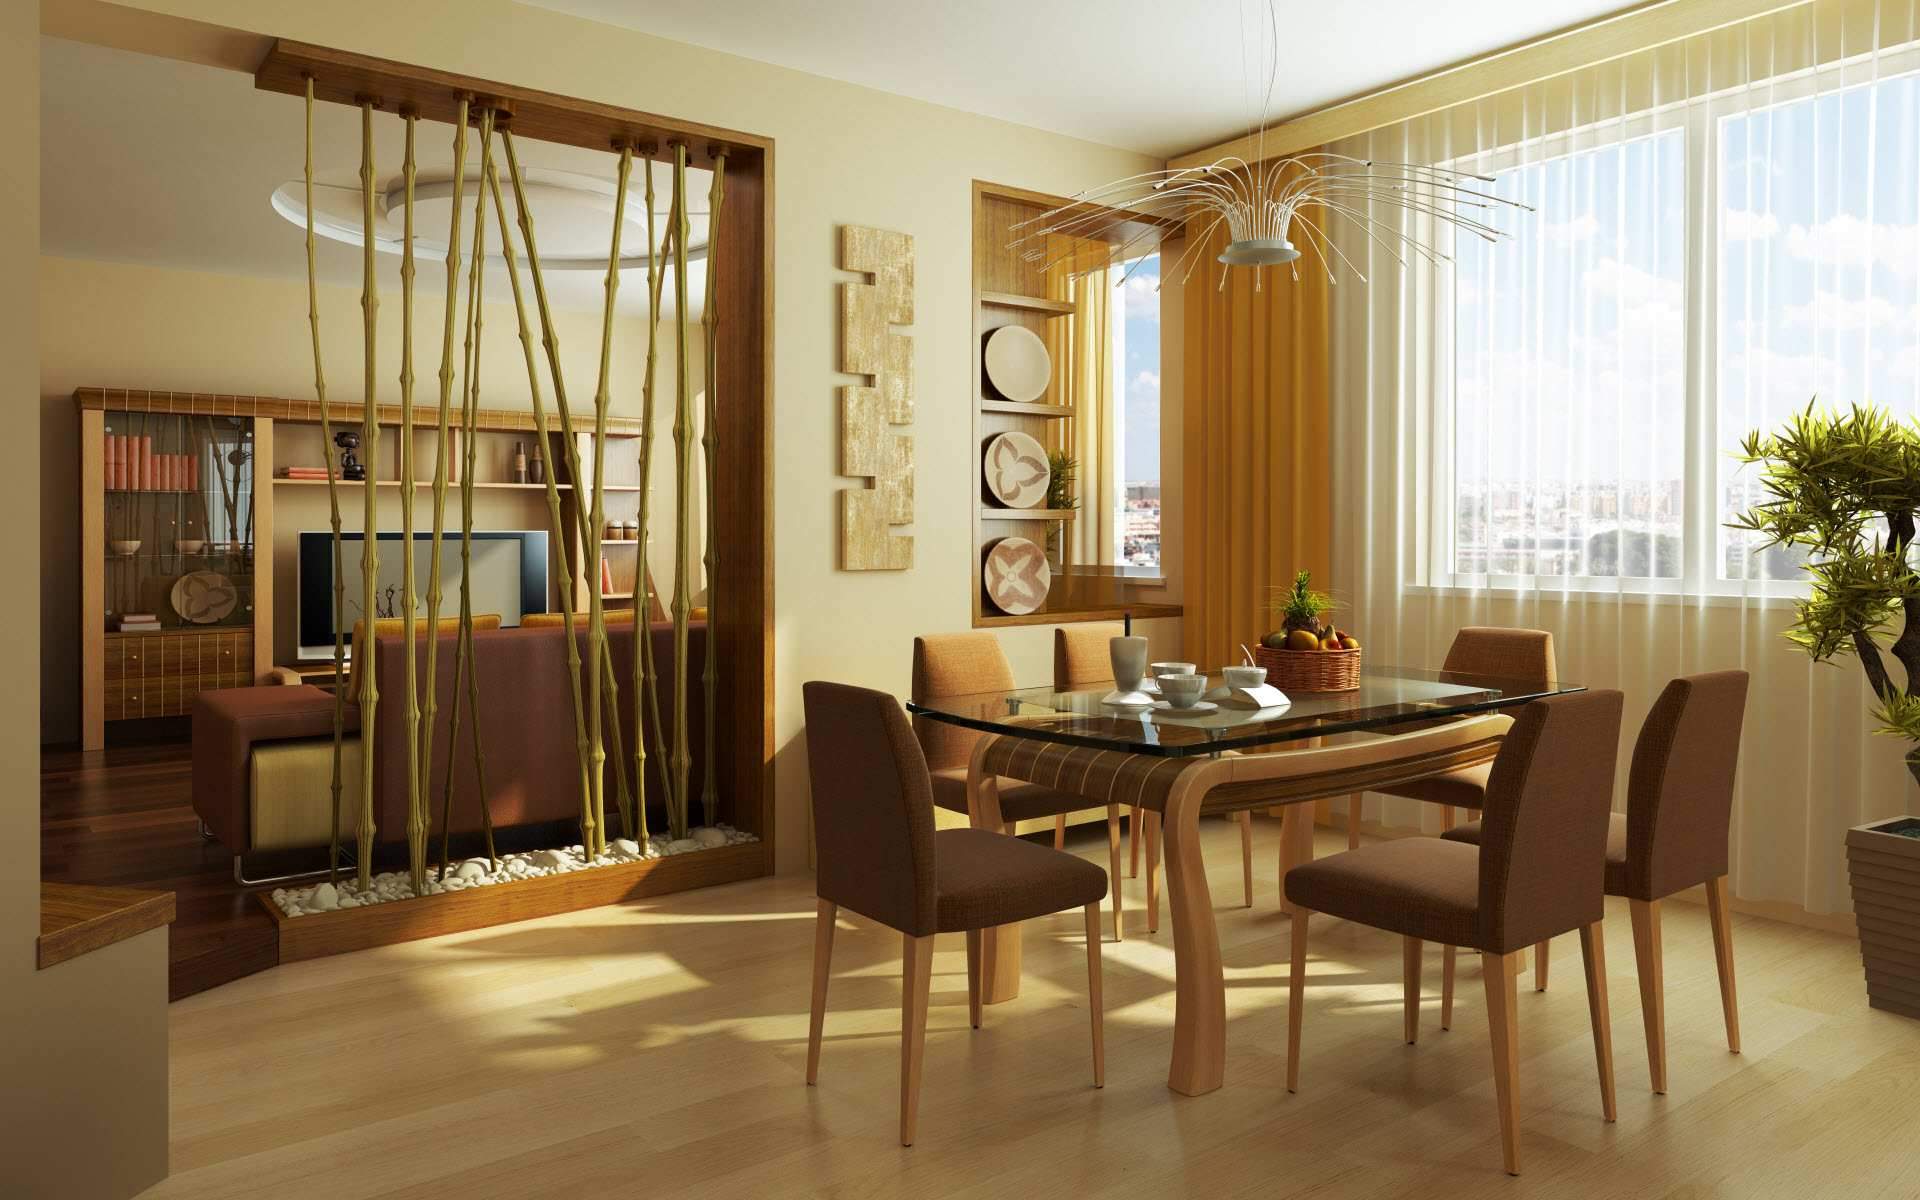 Inspiring Dining Room Interior Design Ideas You Must Try – Ideas 4 Homes